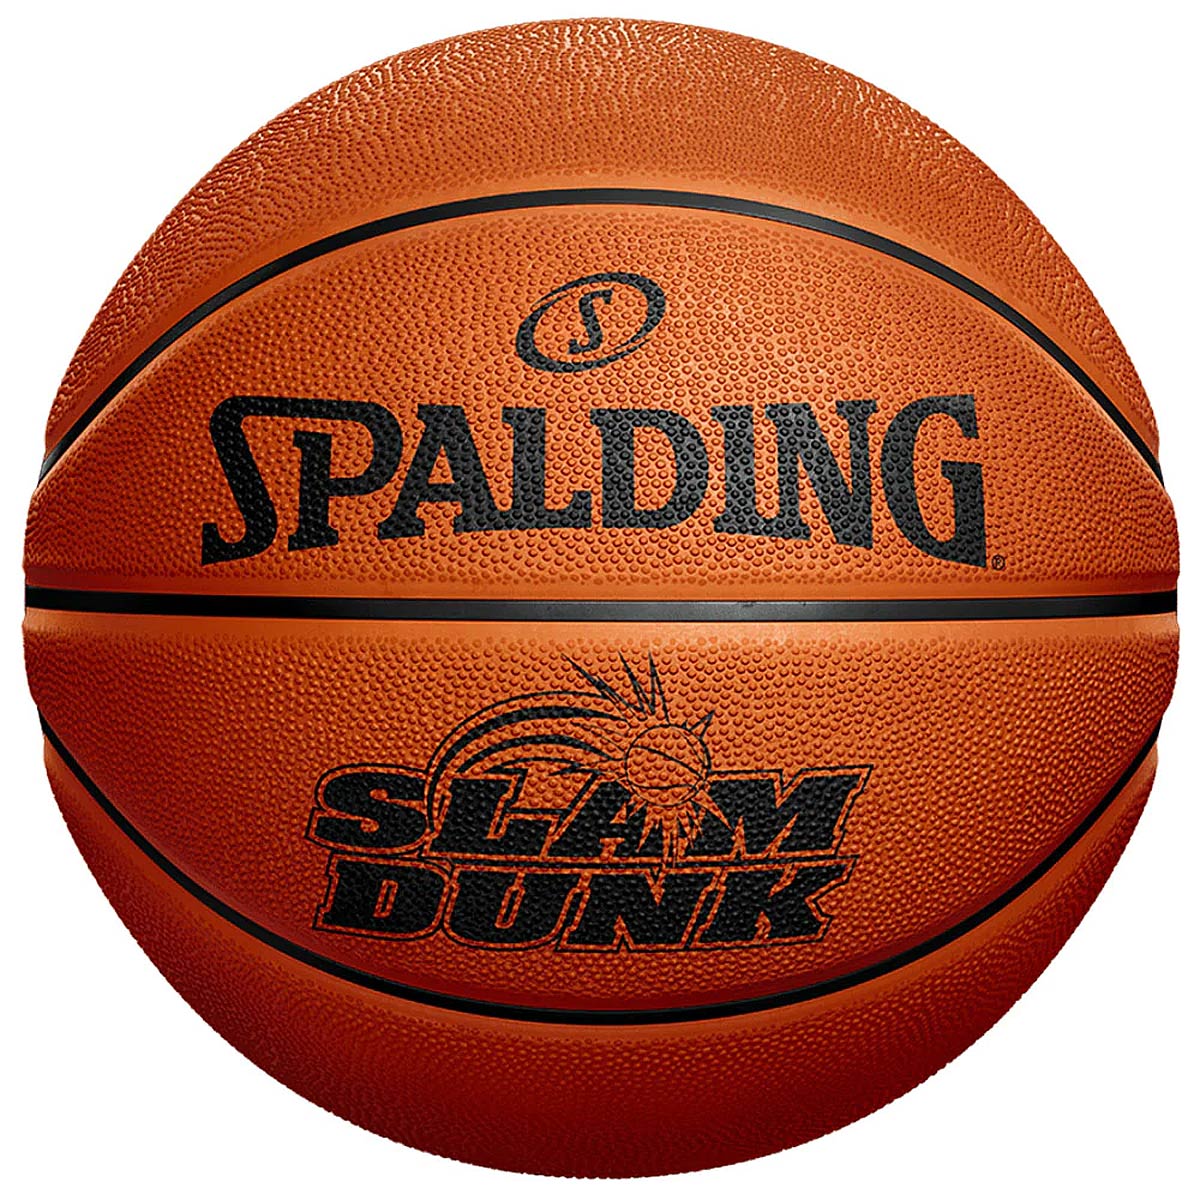 Spalding Slam Dunk Sz6 Rubber Basketball, Orange 6